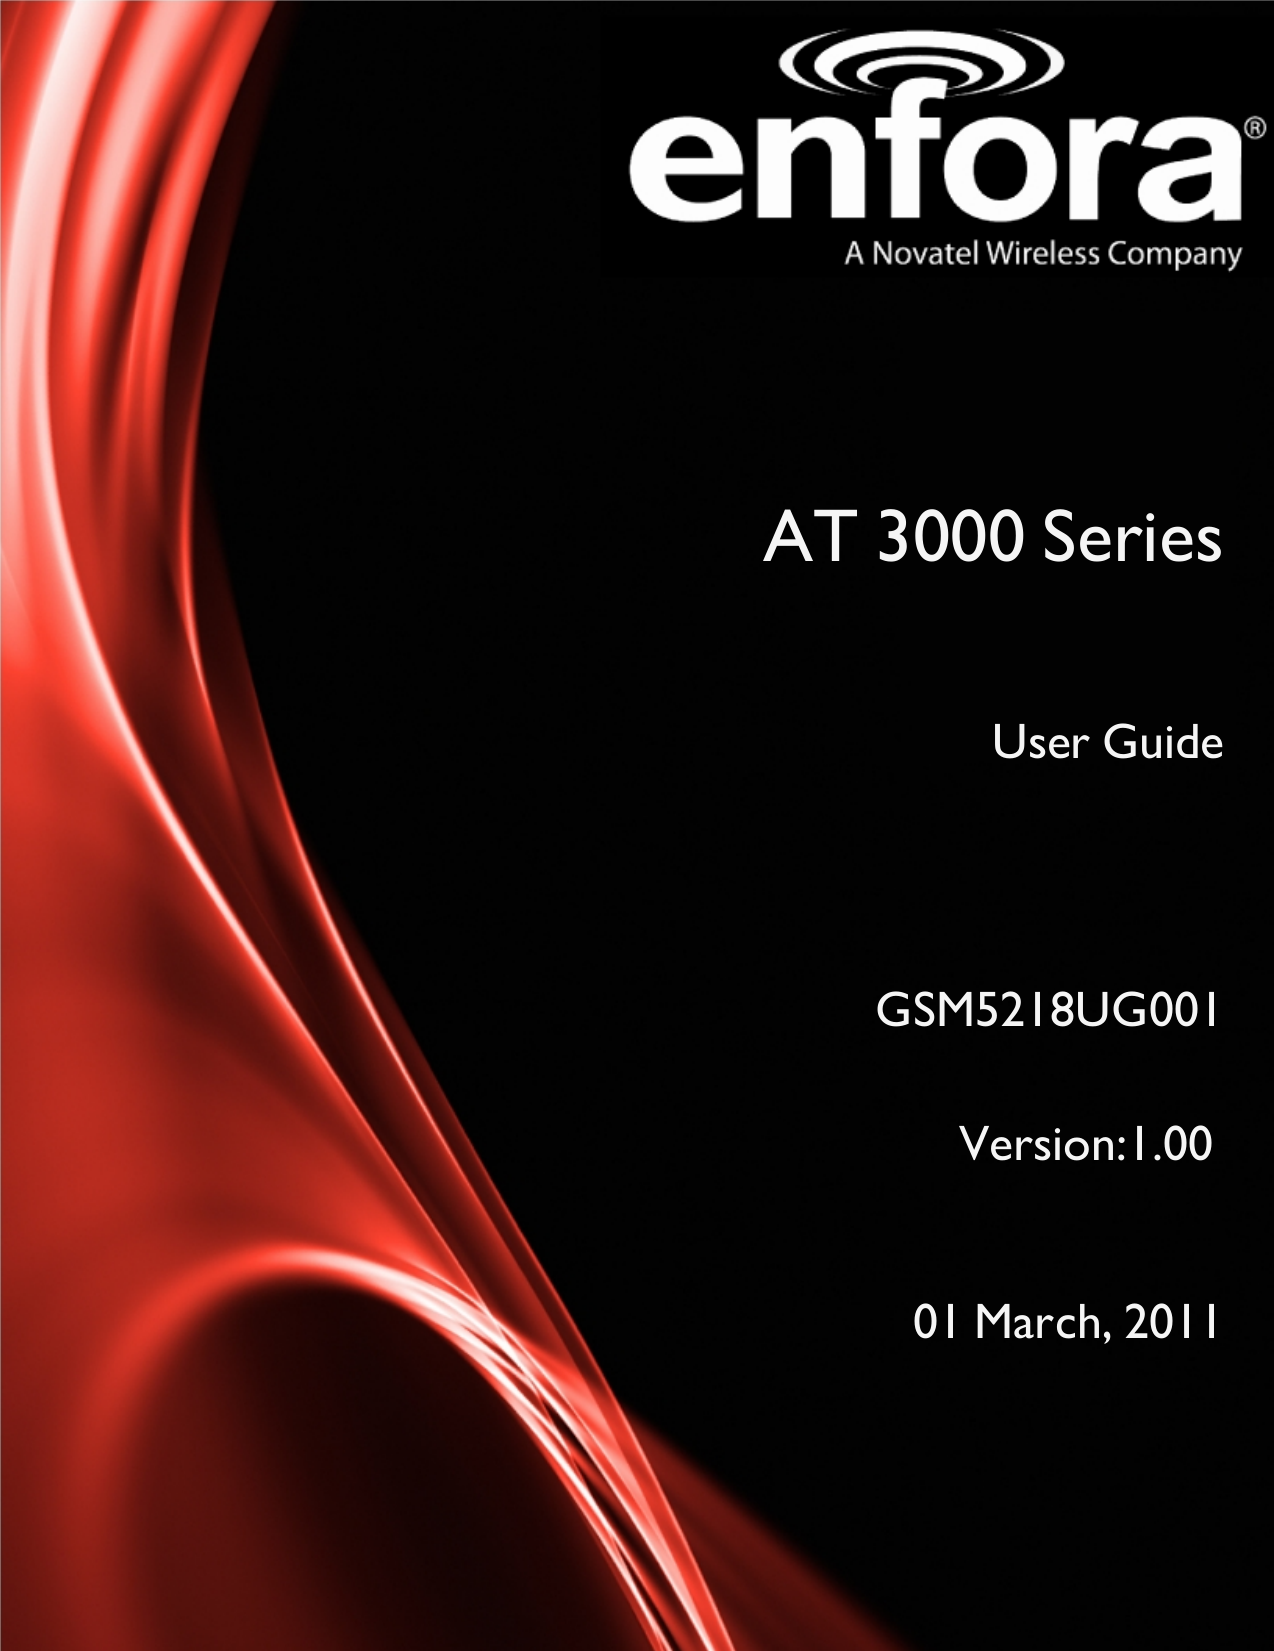 AT 3000 SeriesUser GuideGSM5218UG001Version:1.0001 March, 2011